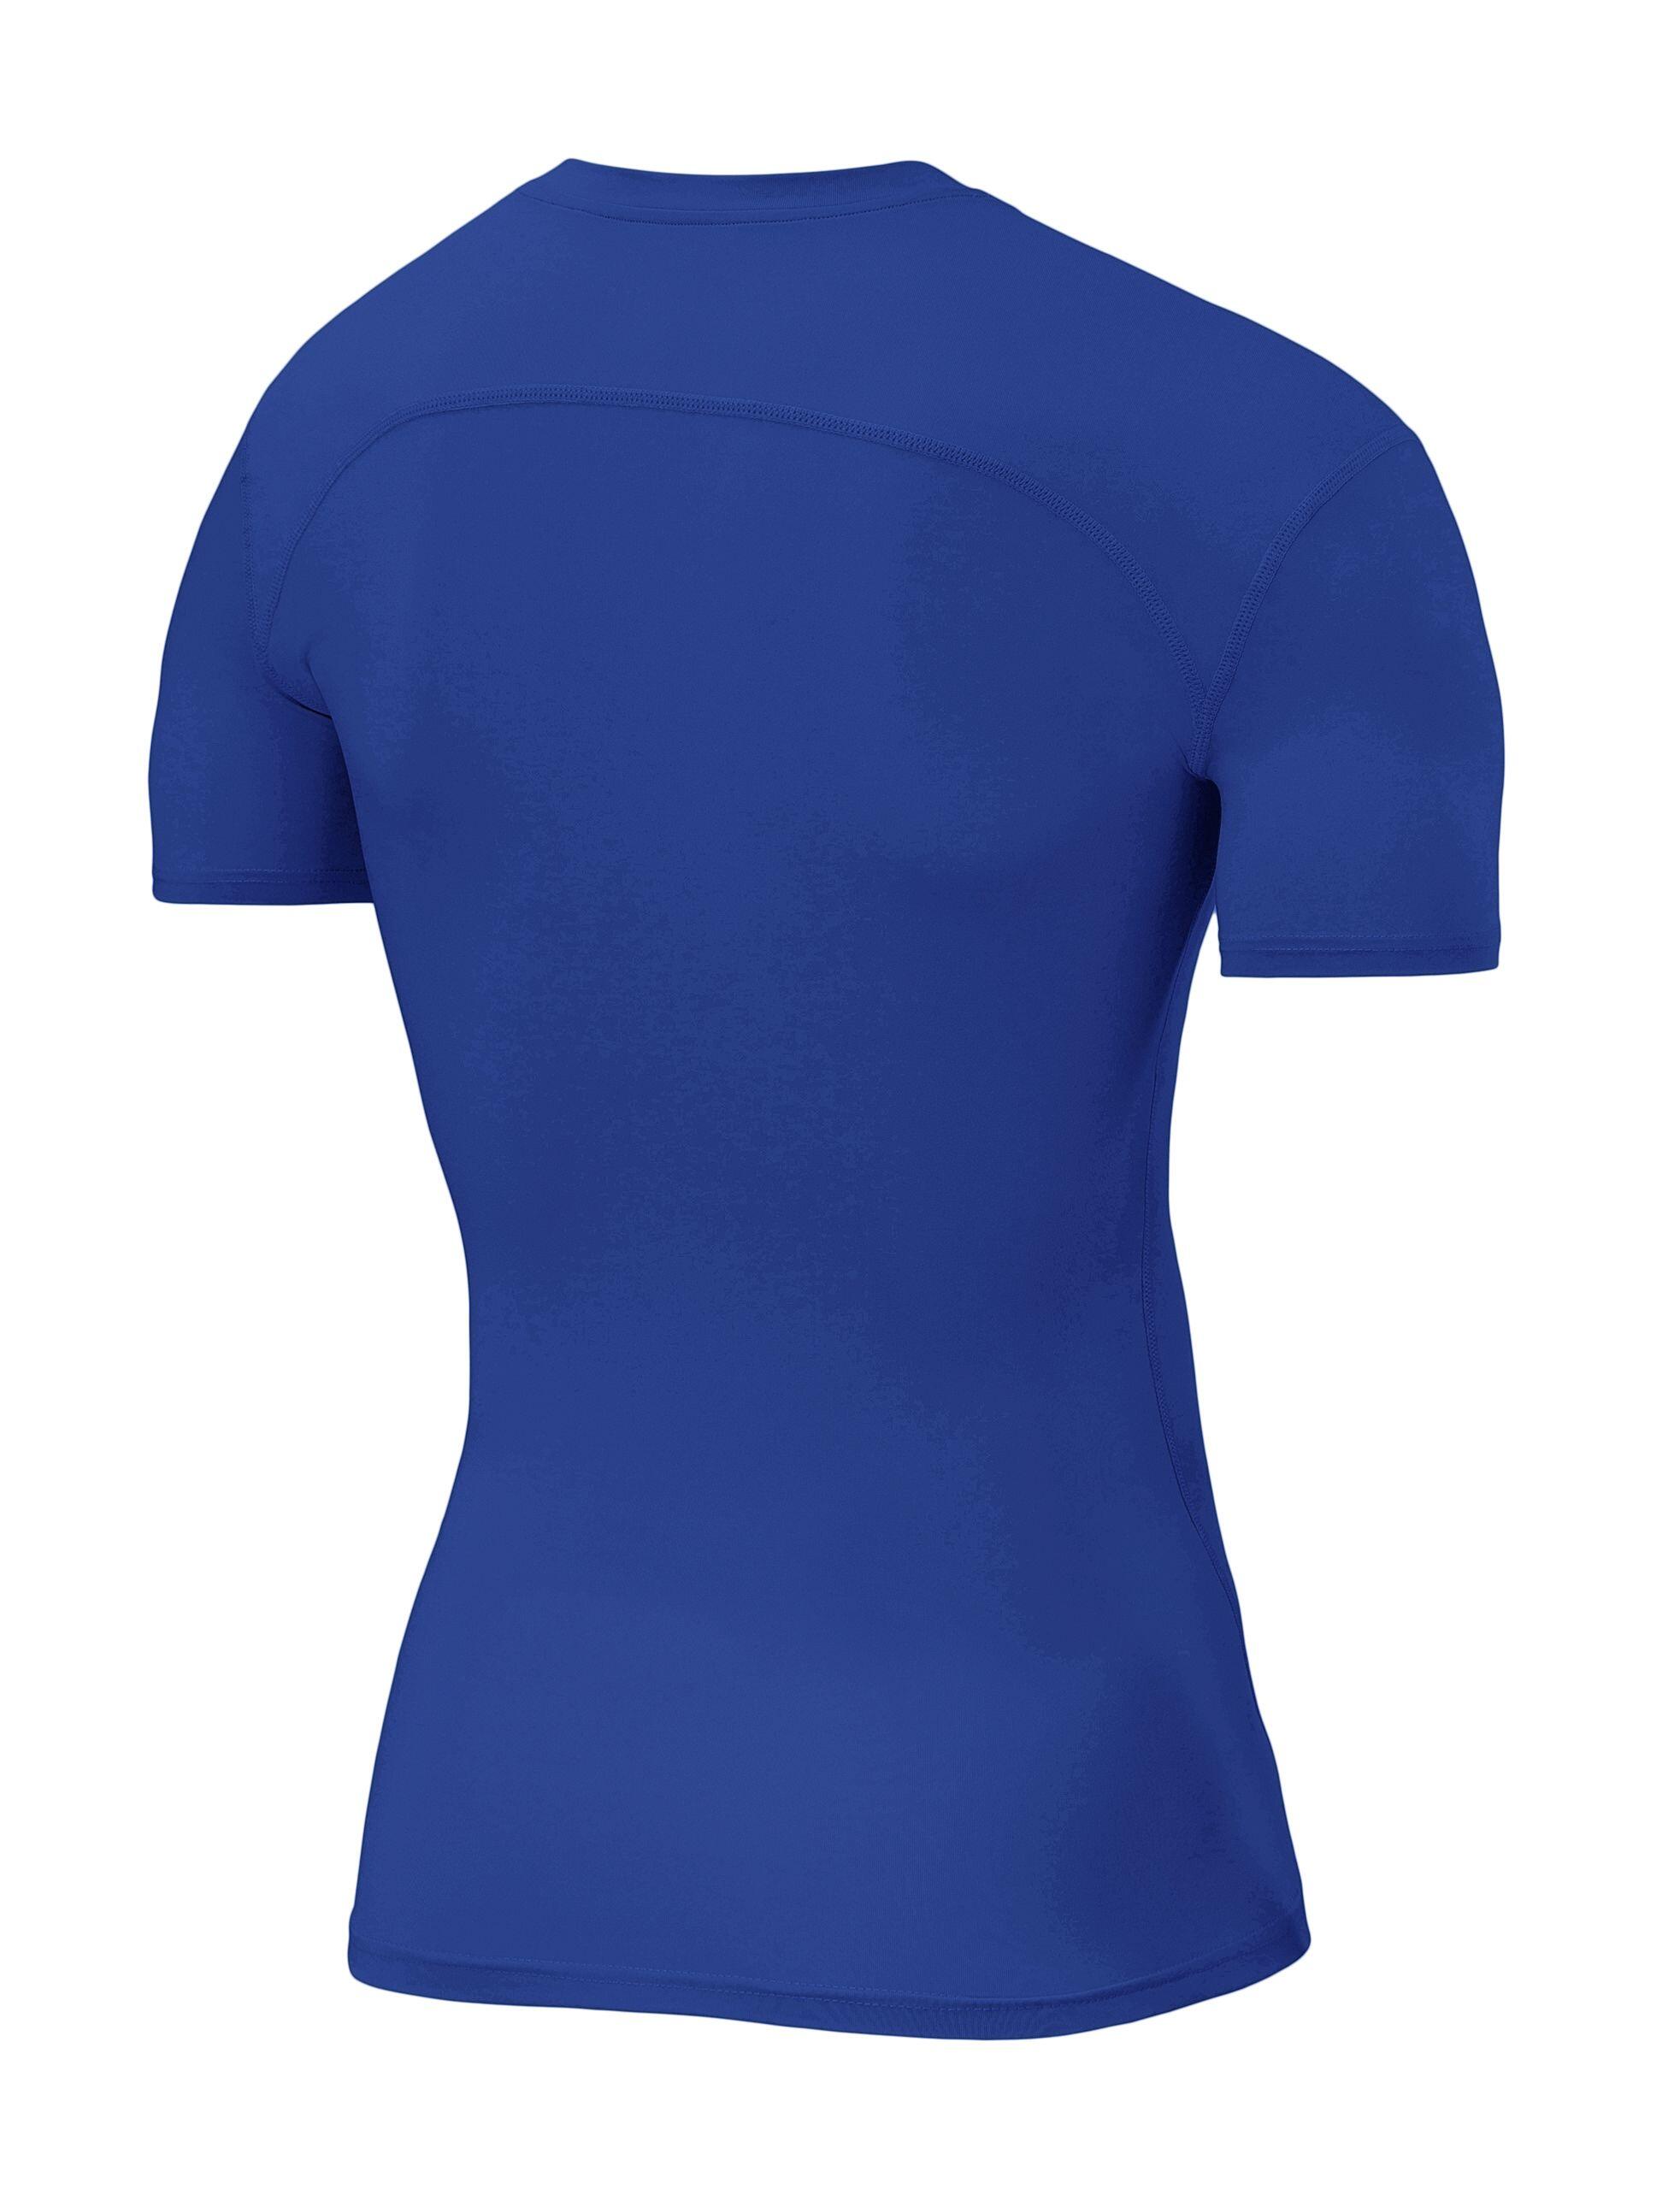 Men's Performance Base Layer Compression T-shirt - Dazzling Blue 3/4